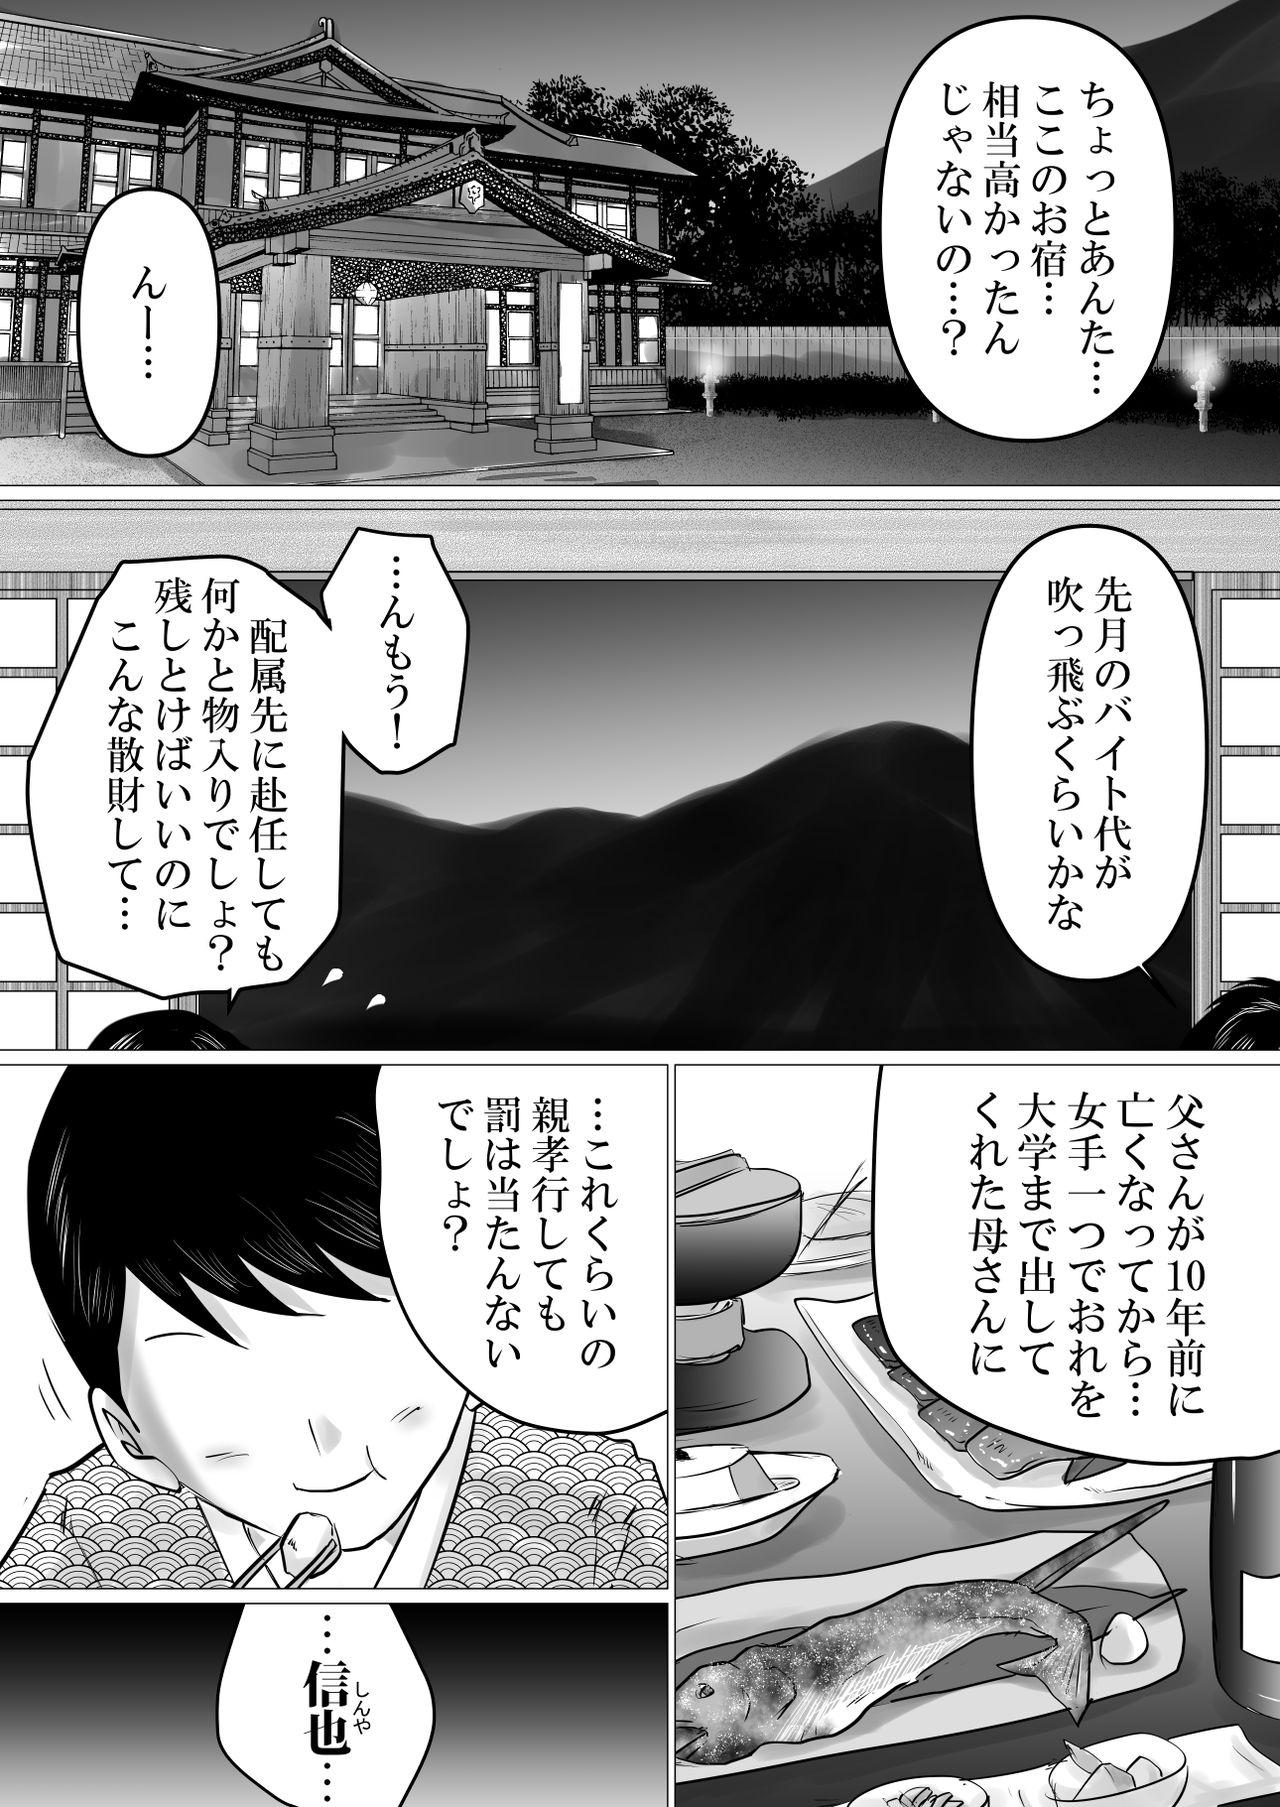 Mature Jukubo to futari de, onsen ryokō. - Original Baile - Page 2